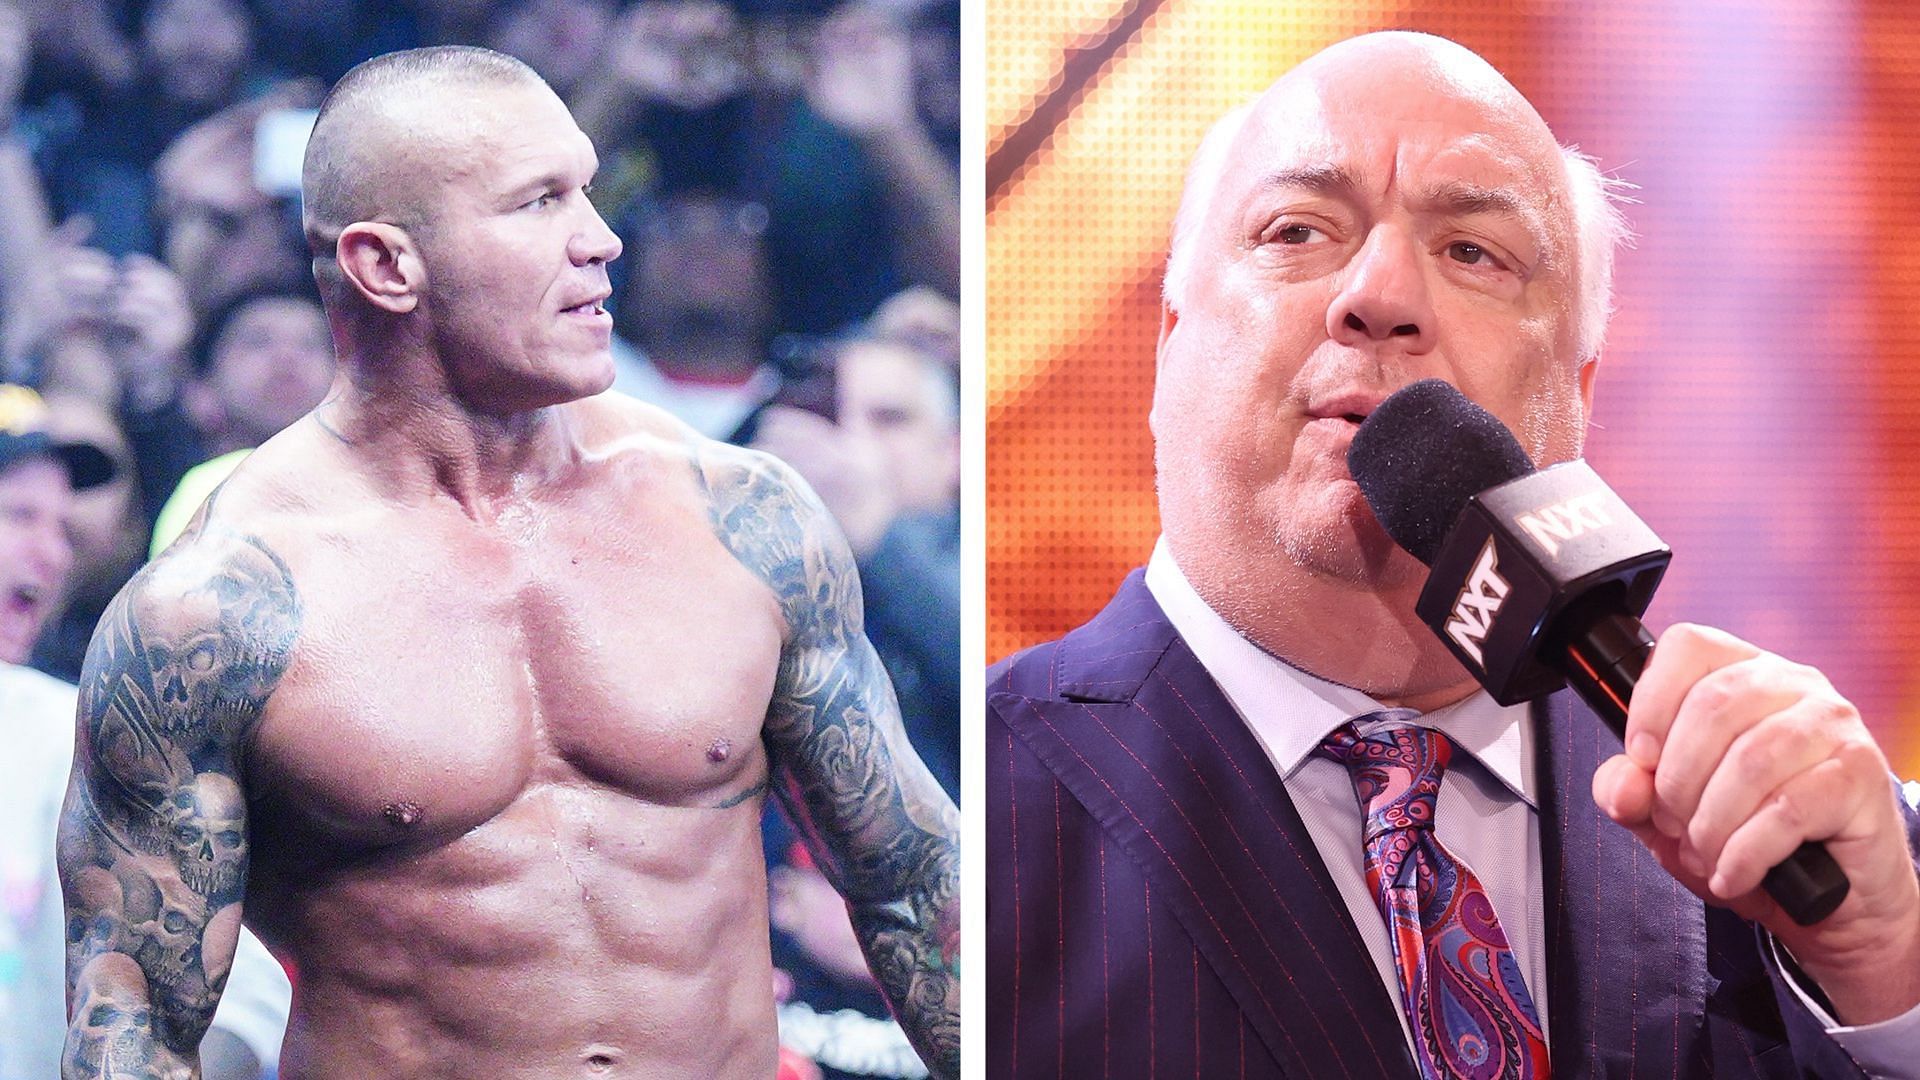 Randy Orton will appear on WWE SmackDown